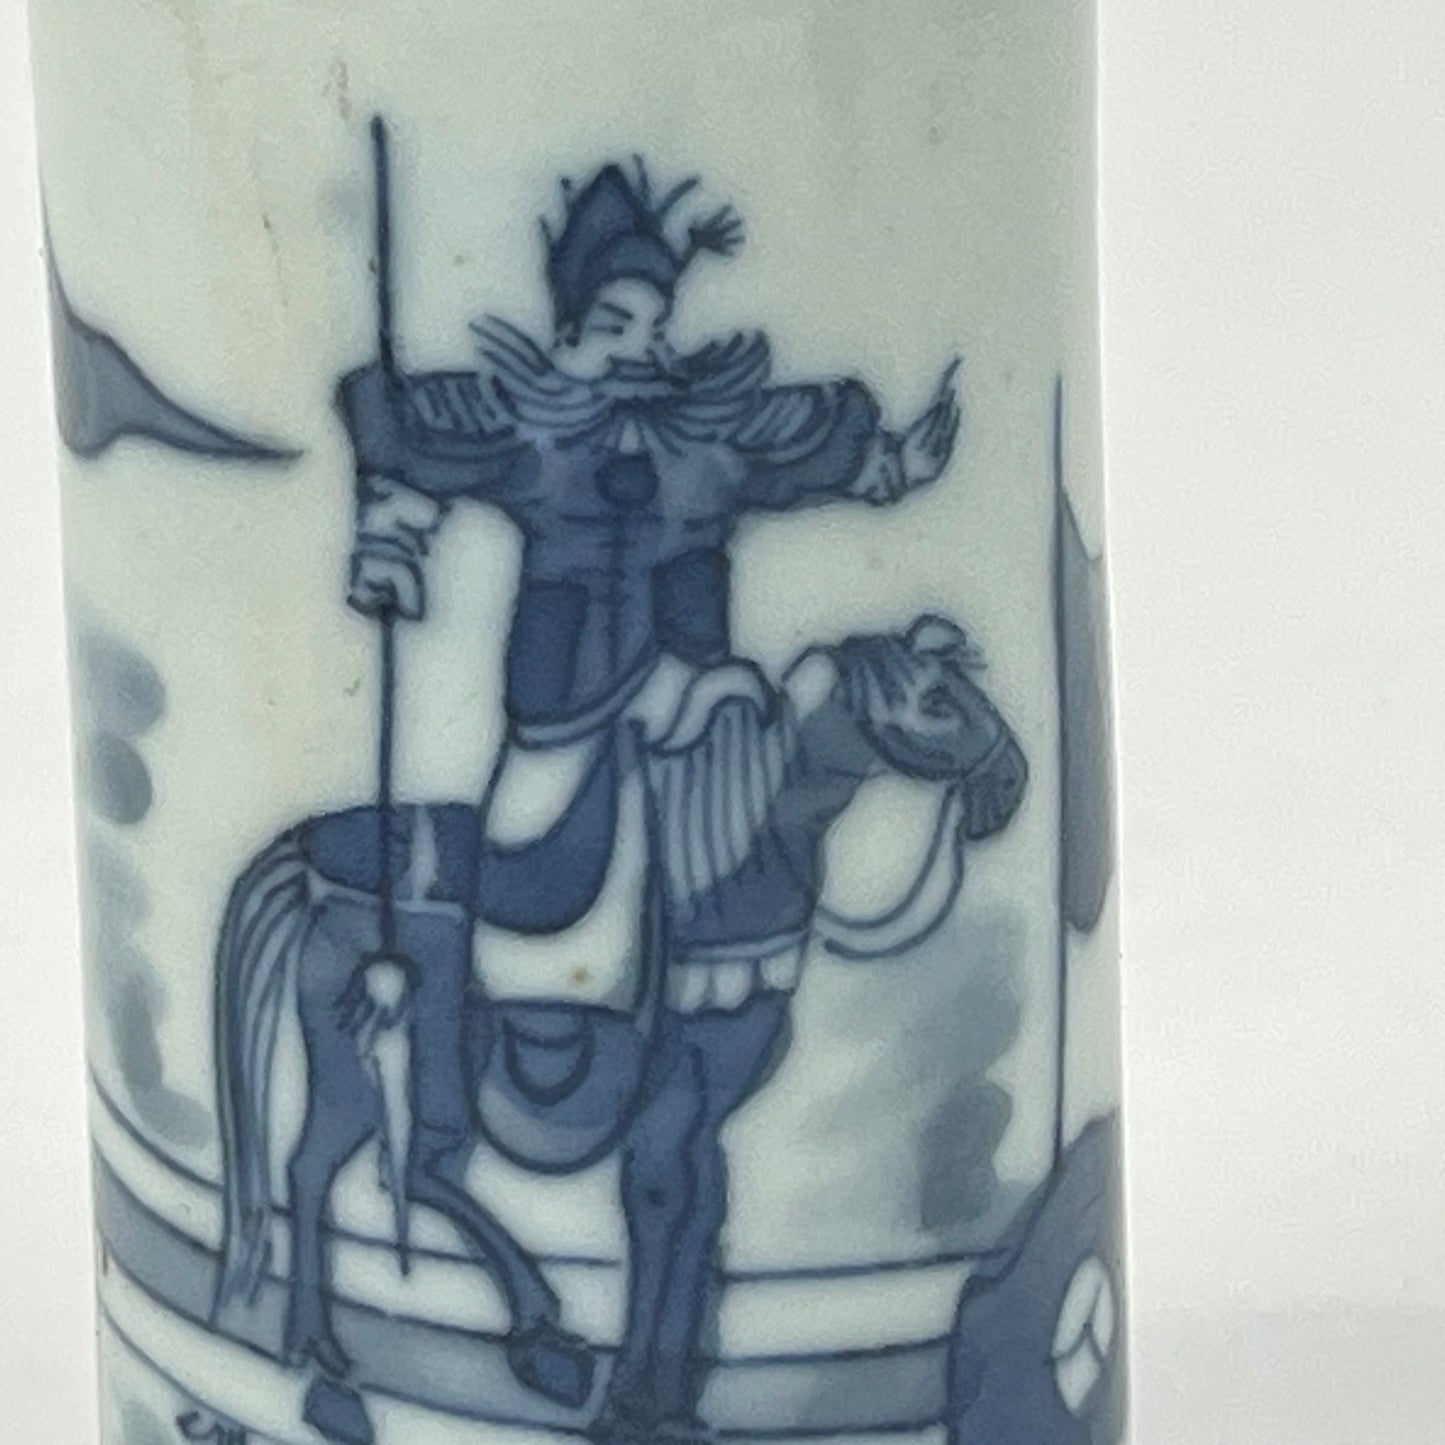 Vintage Chinese Ceramic Snuff Bottle Blue & White 3.5"